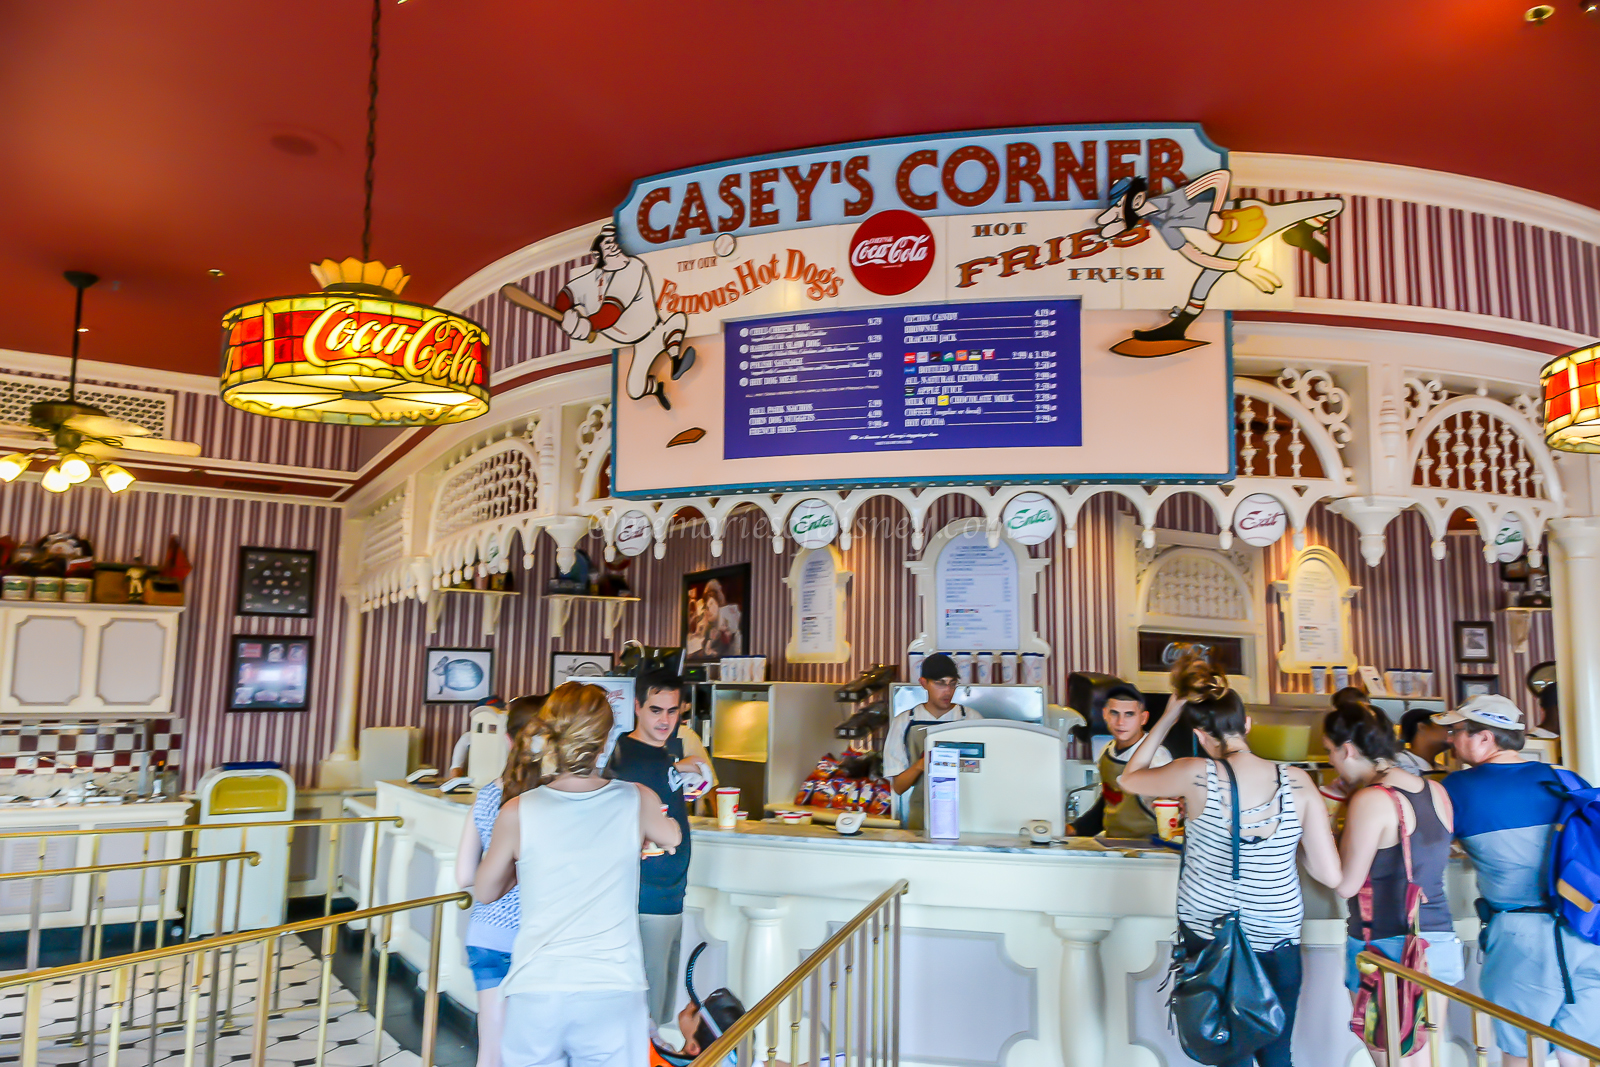 Caseys Corner - Disney's Best Hot Dog